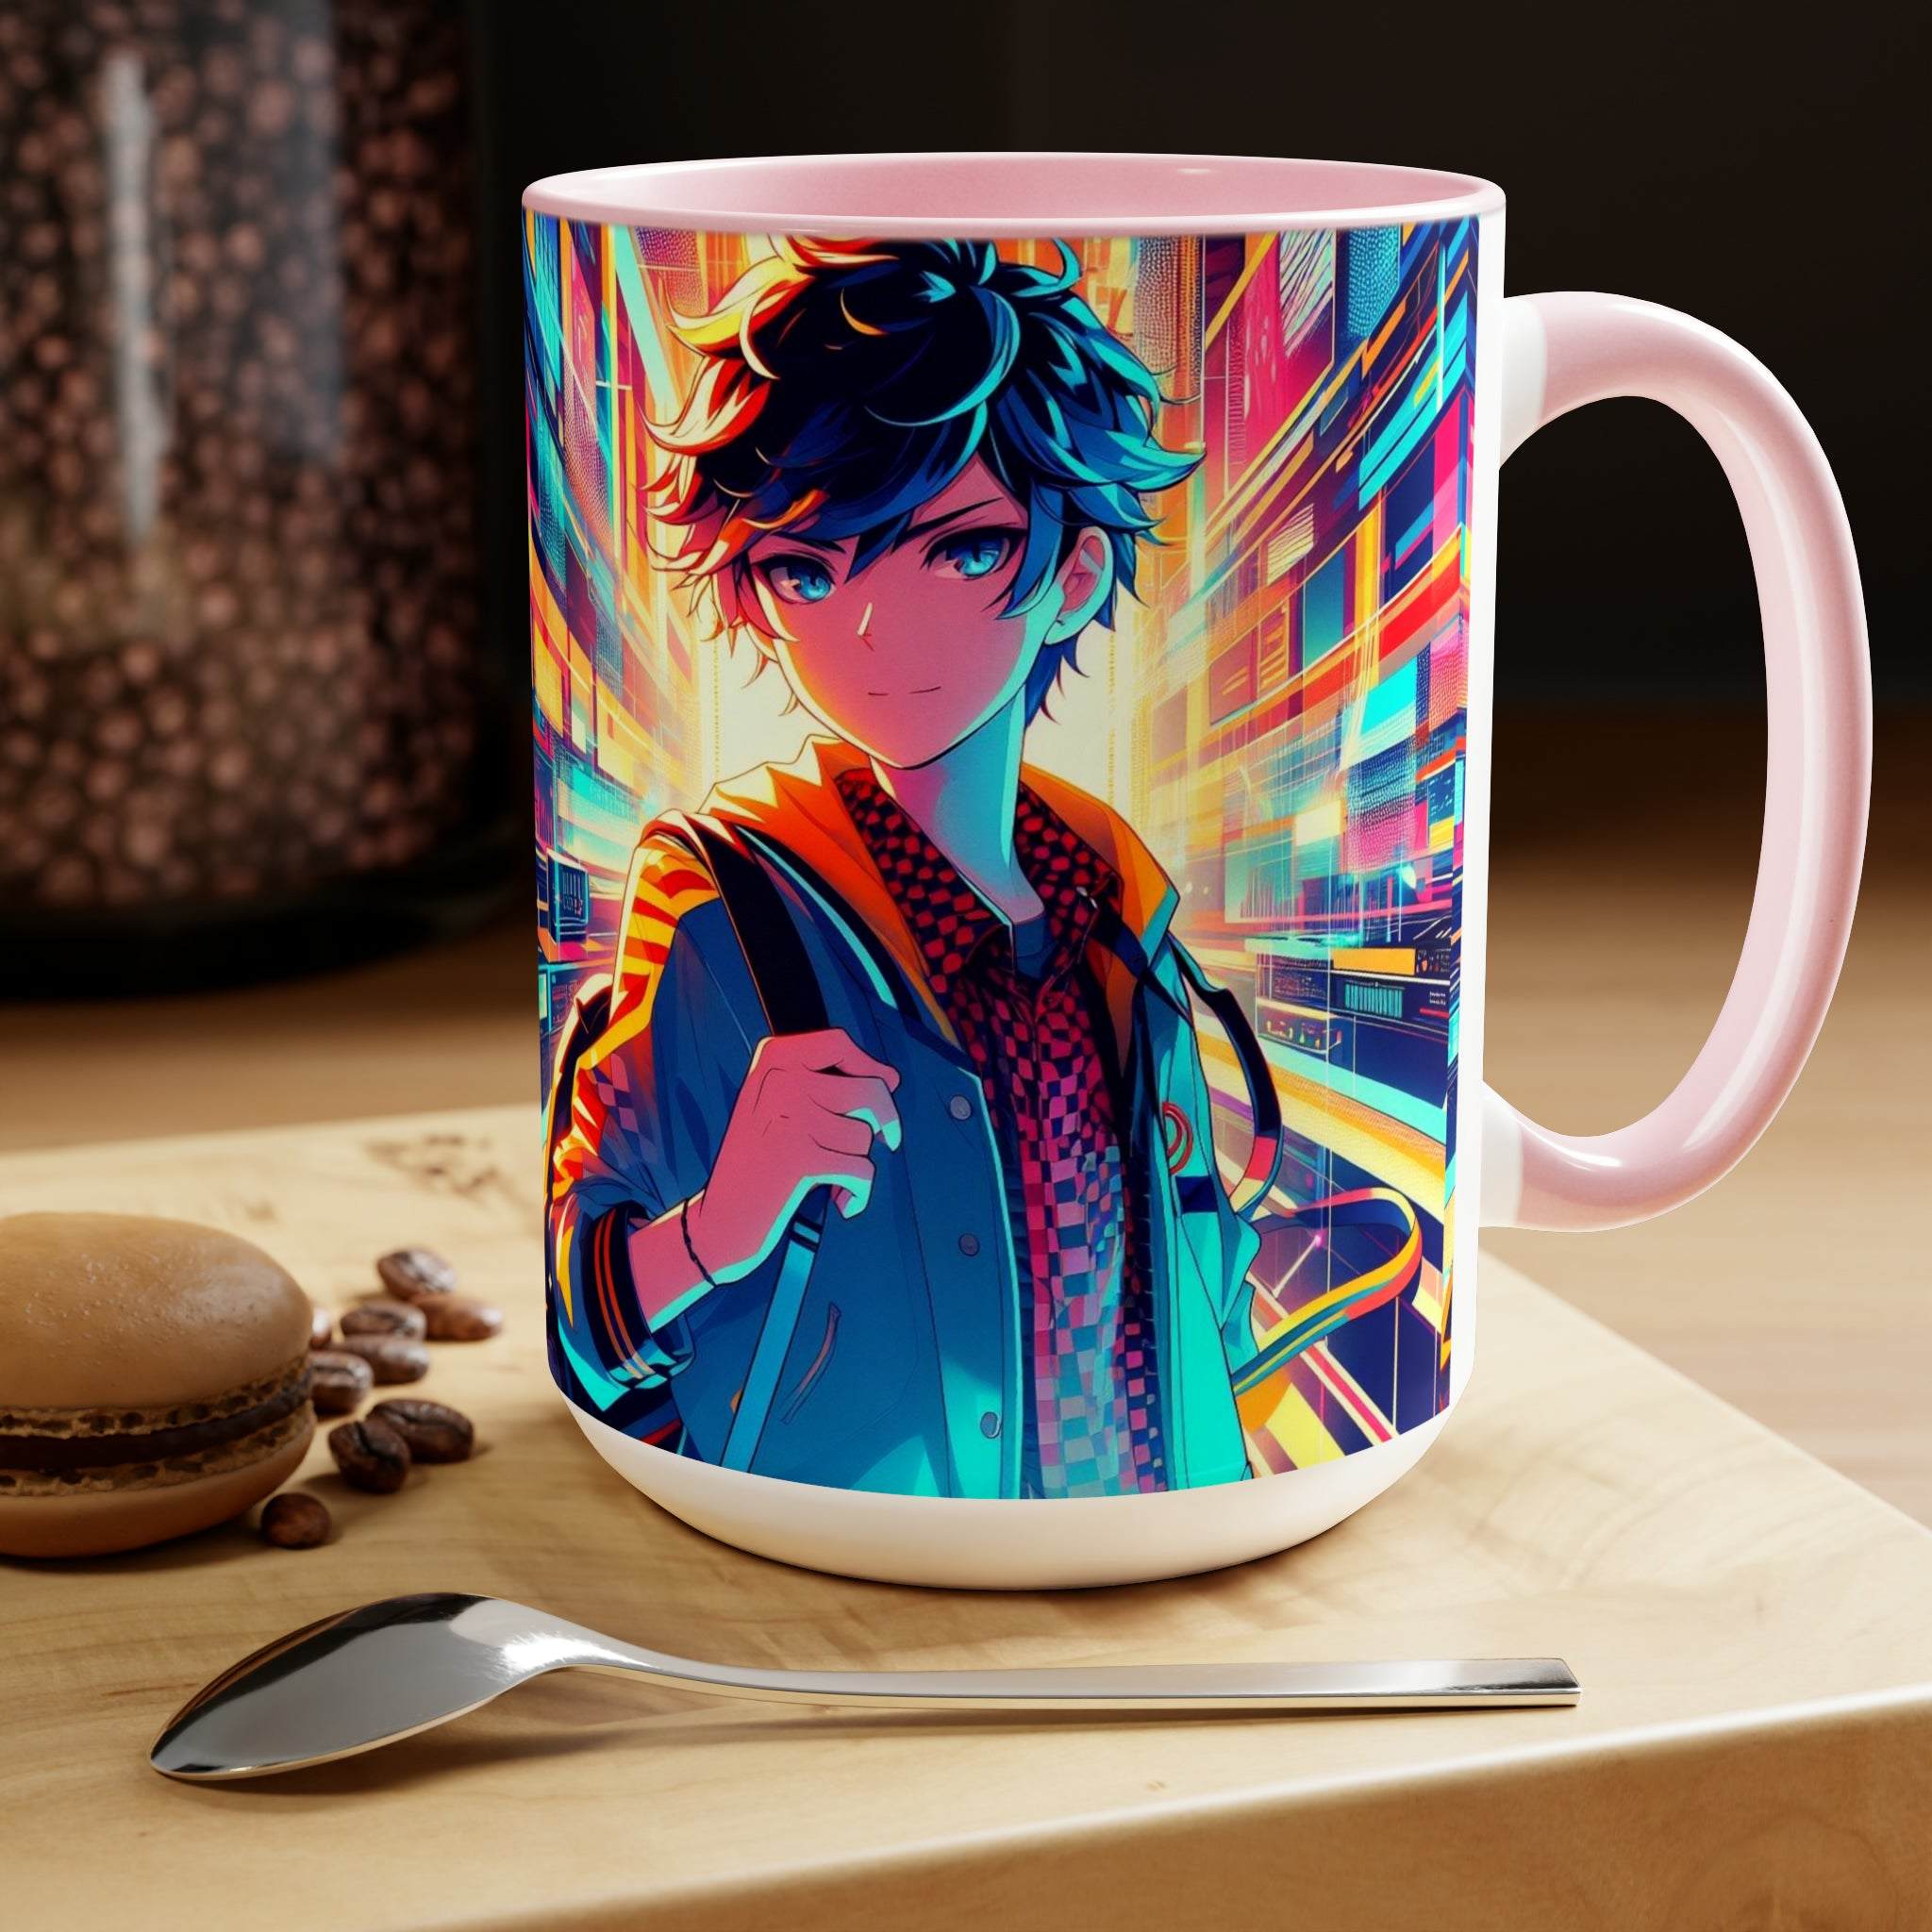 Oshi no Ko Anime Mug Cup Ceramic Water Cup Coffee Cup Holiday 340ml | eBay